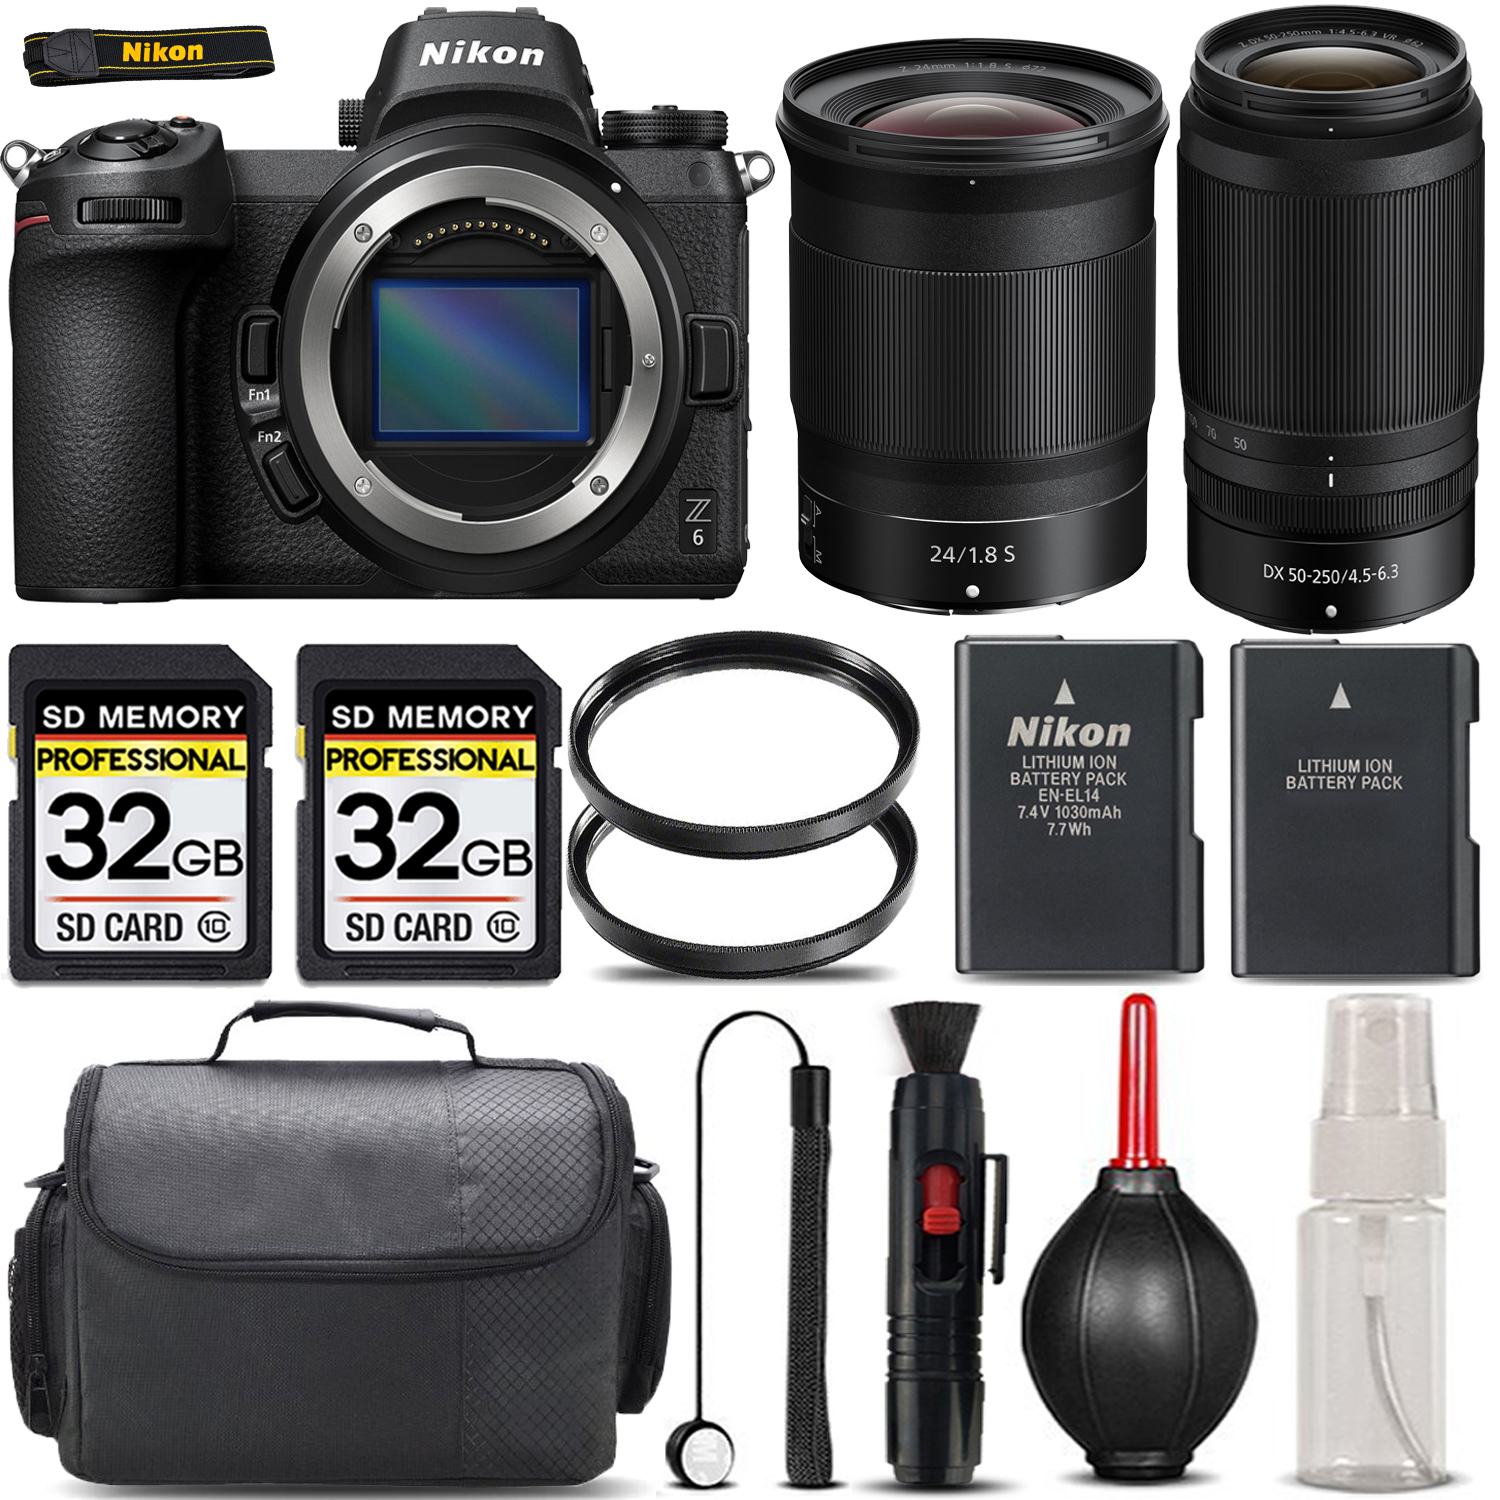 Z6 + 50-250mm f/4.5-6.3 Lens + 24mm f/1.8 S Lens + Handbag - SAVE BIG KIT *FREE SHIPPING*